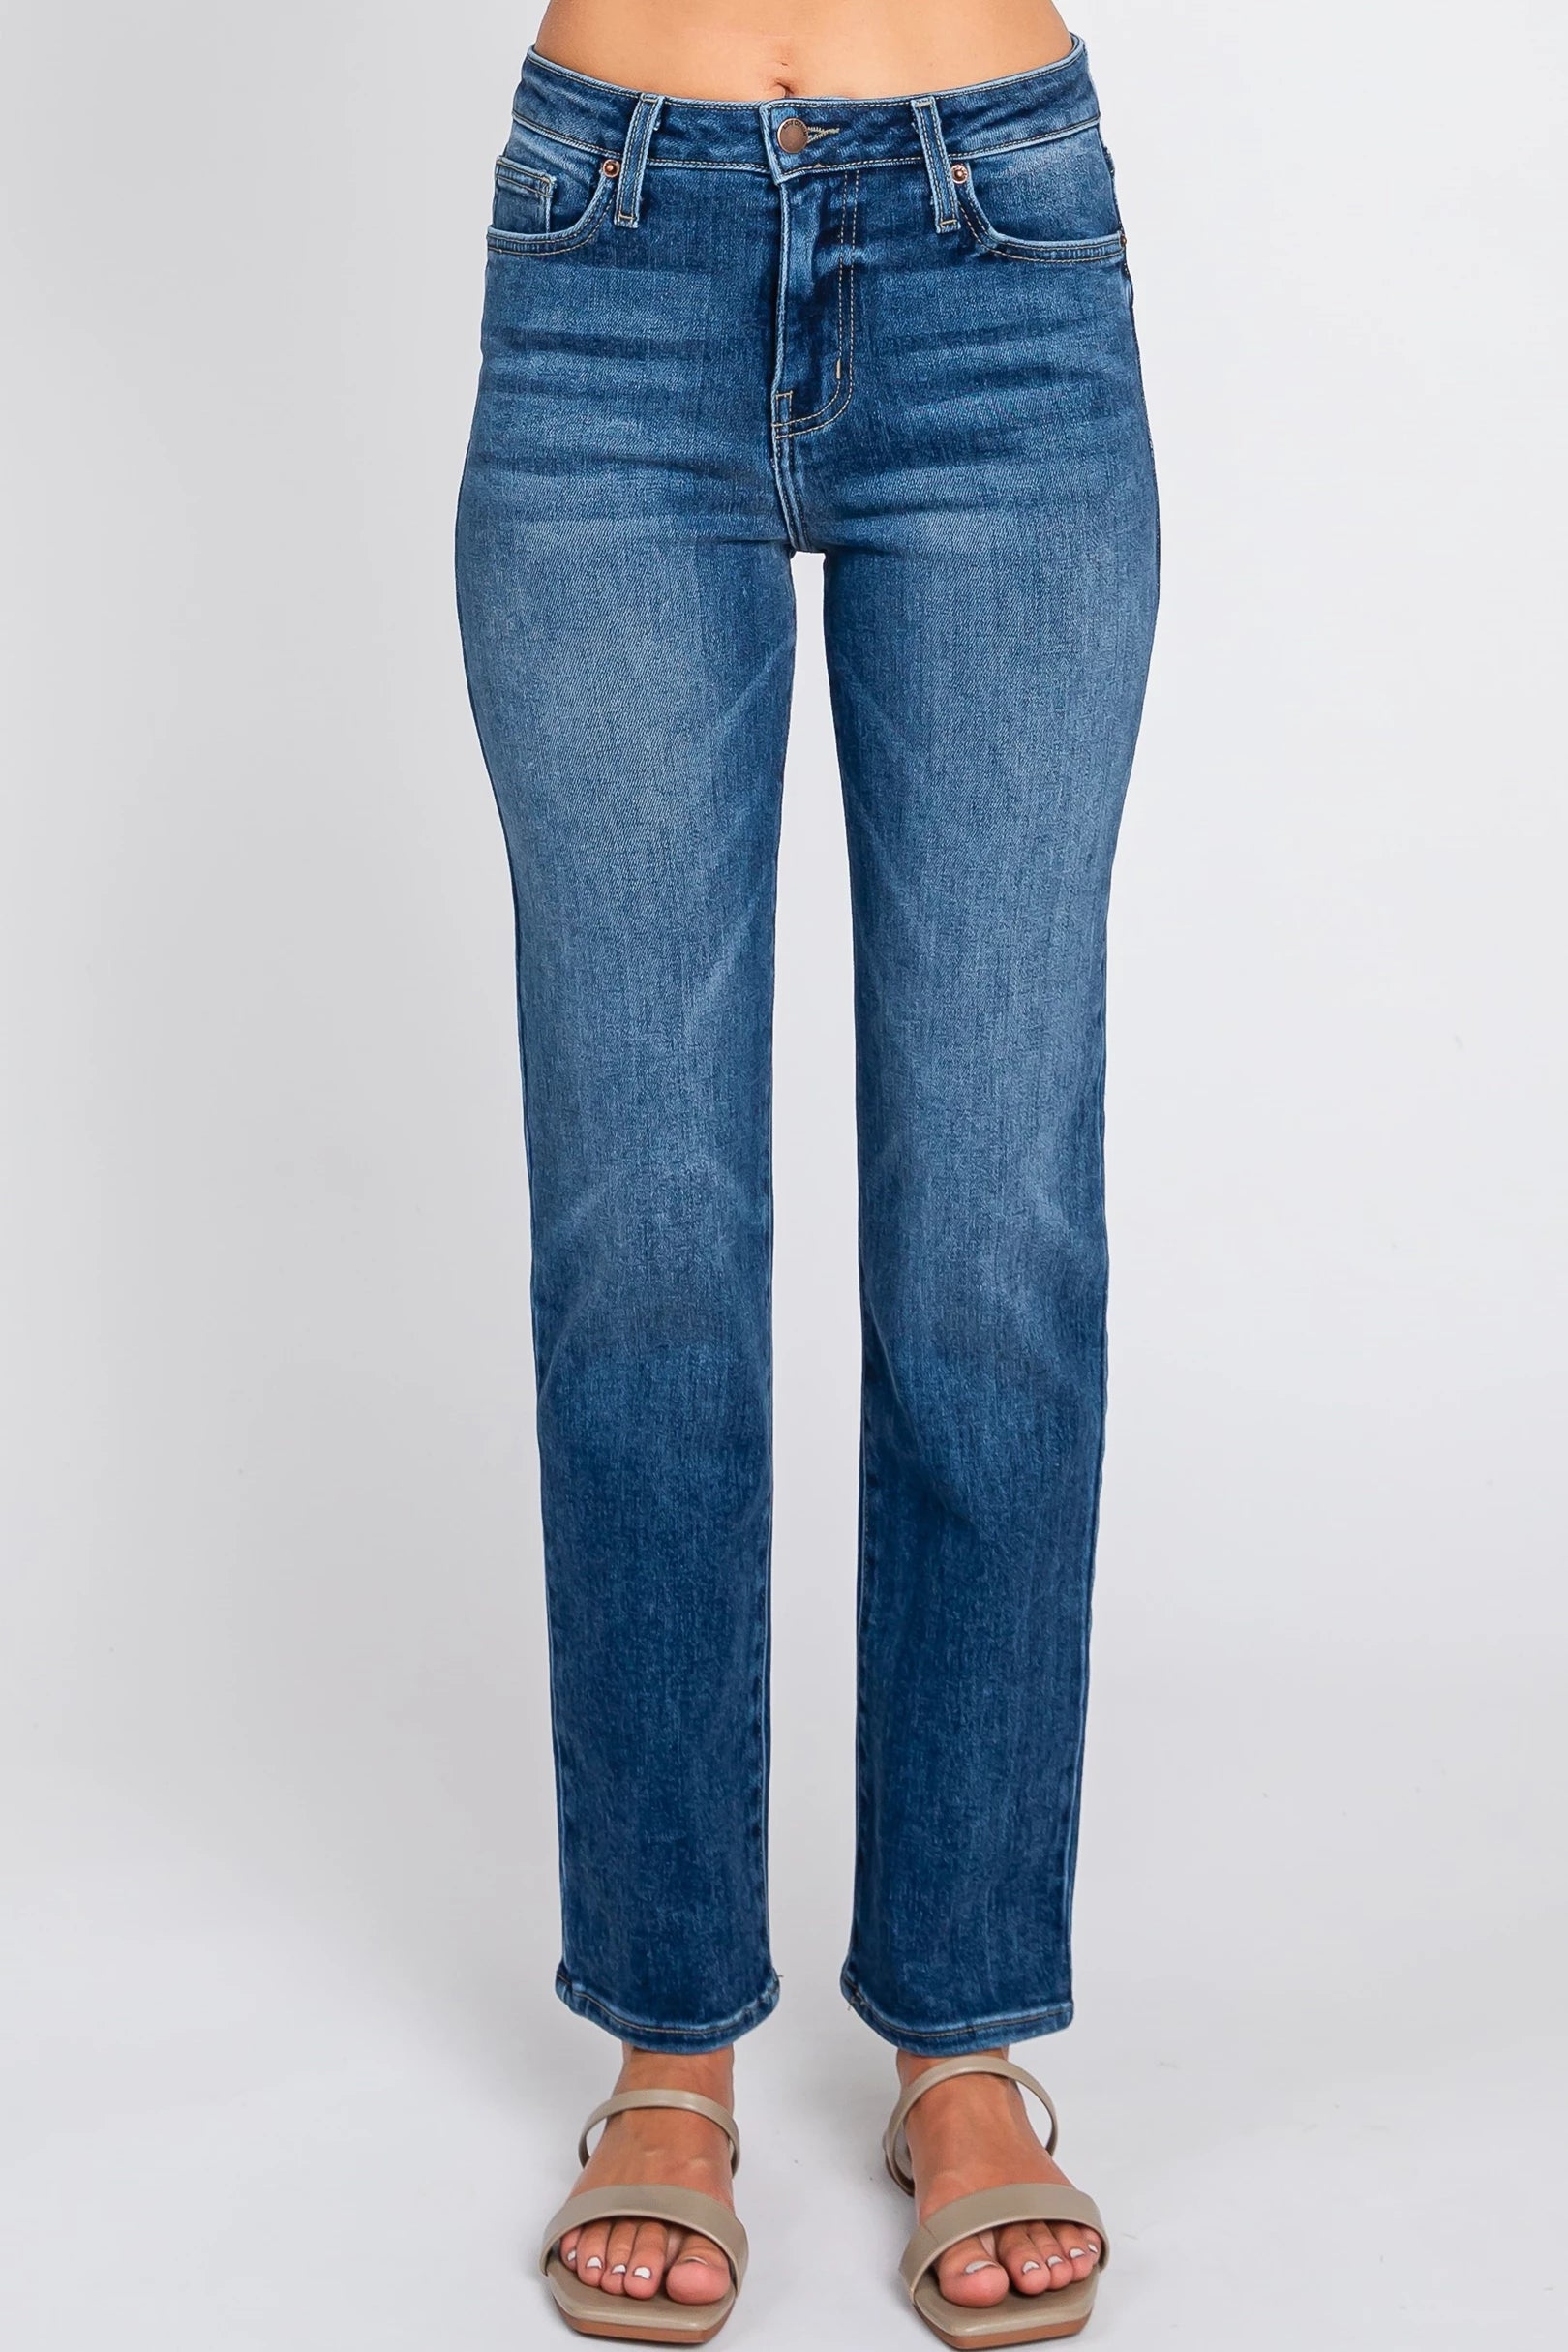 Siena Basic Straight Leg Essential Jean